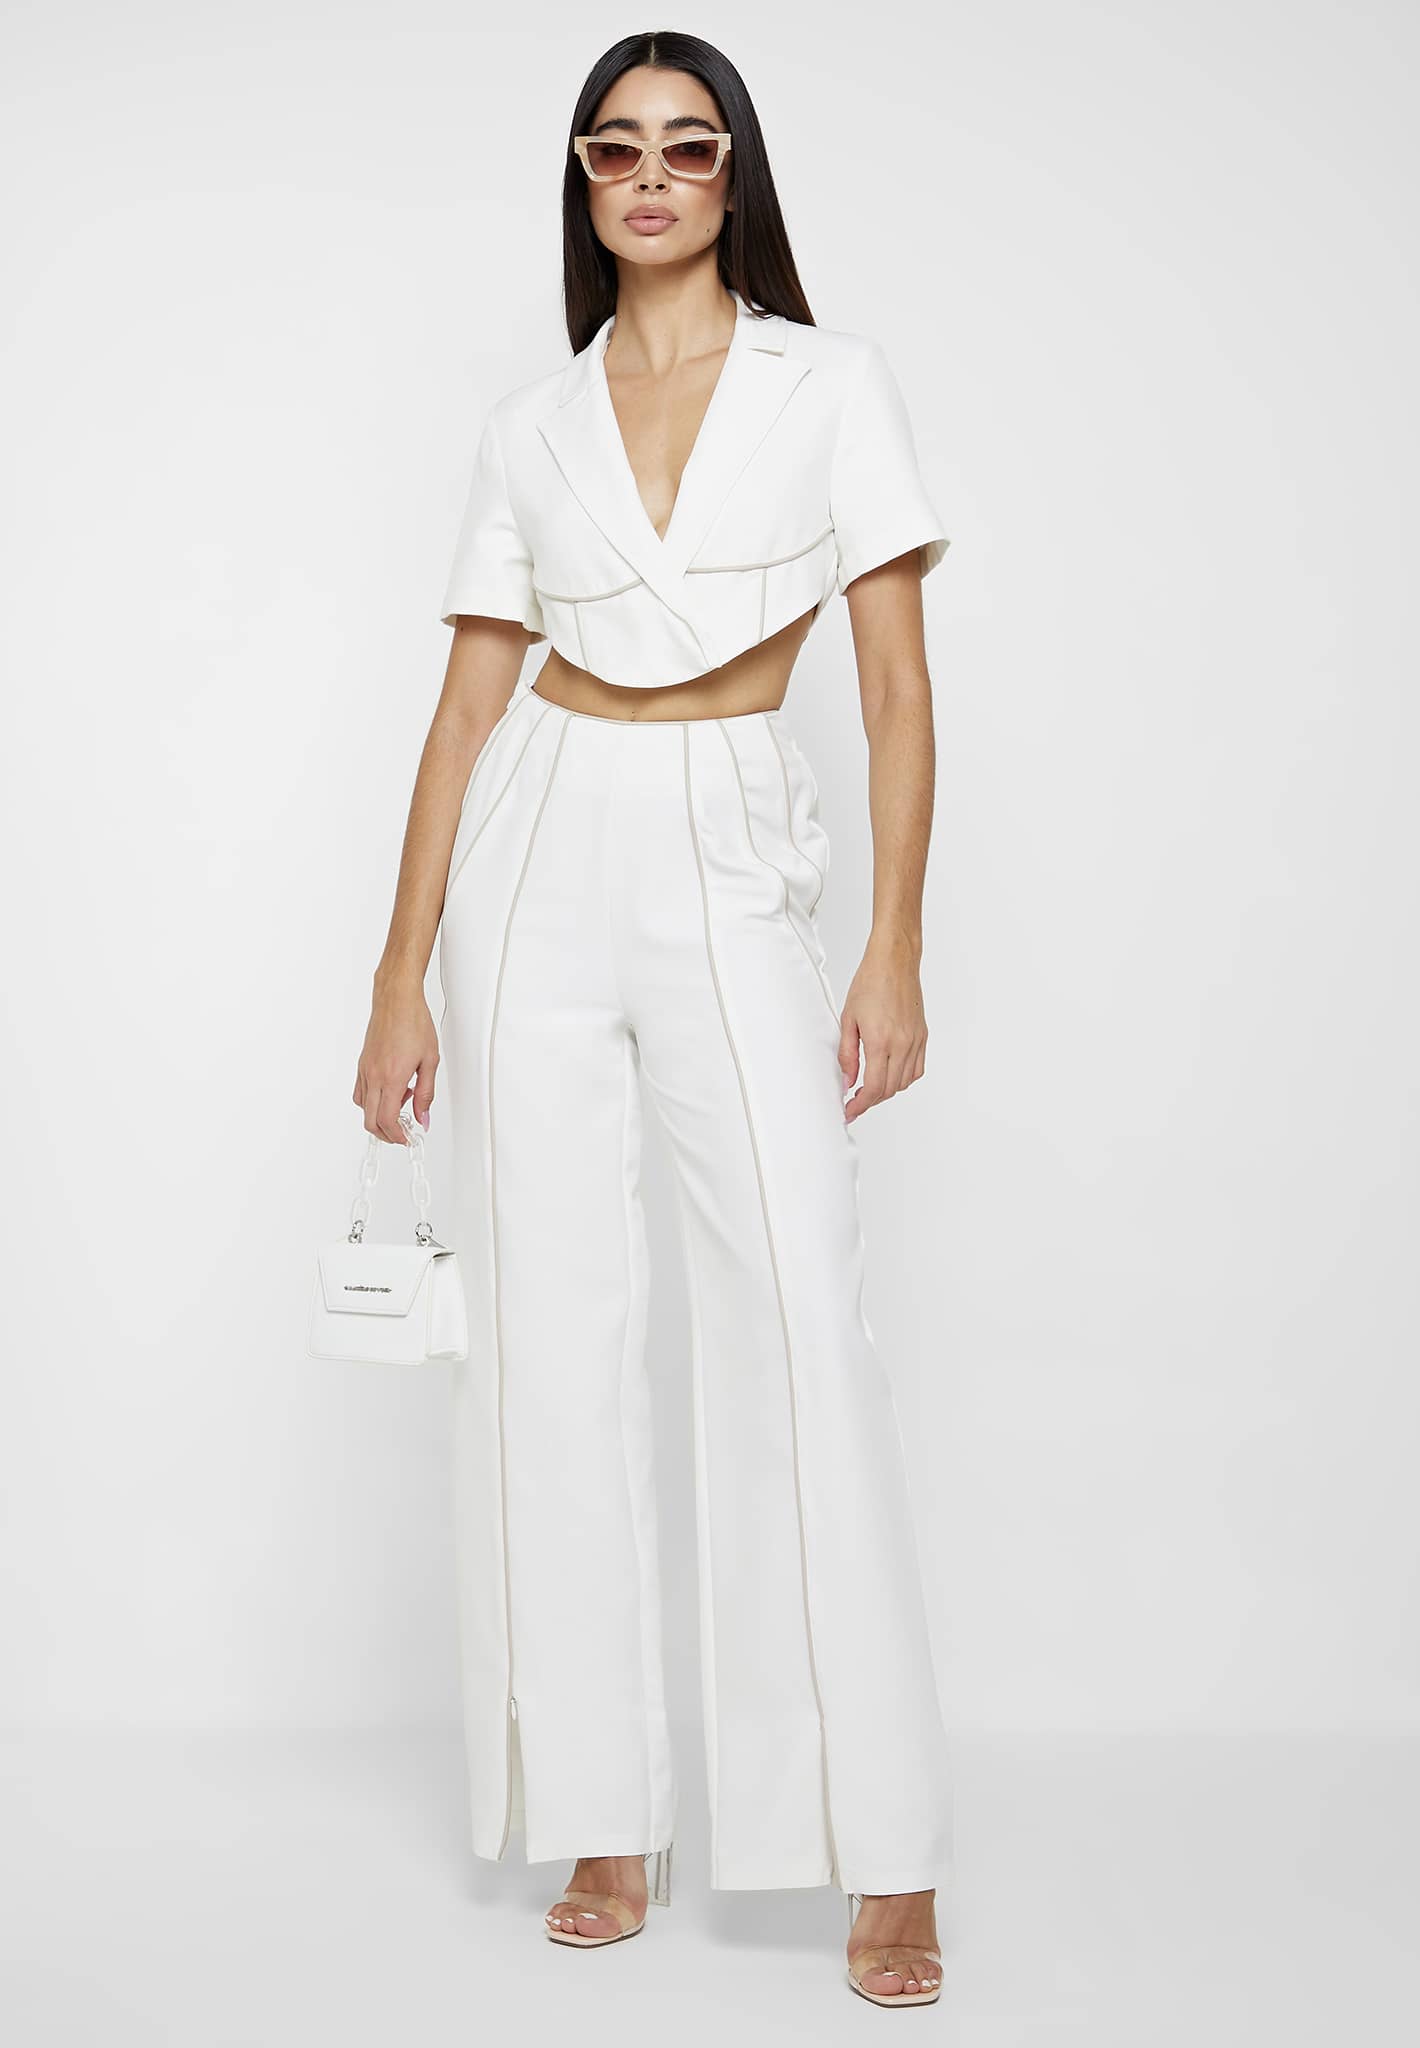 SAINT LAURENT Pants Women  White tailored trousers White  SAINT LAURENT  695024 Y513W9007  Leam Luxury Shopping Online